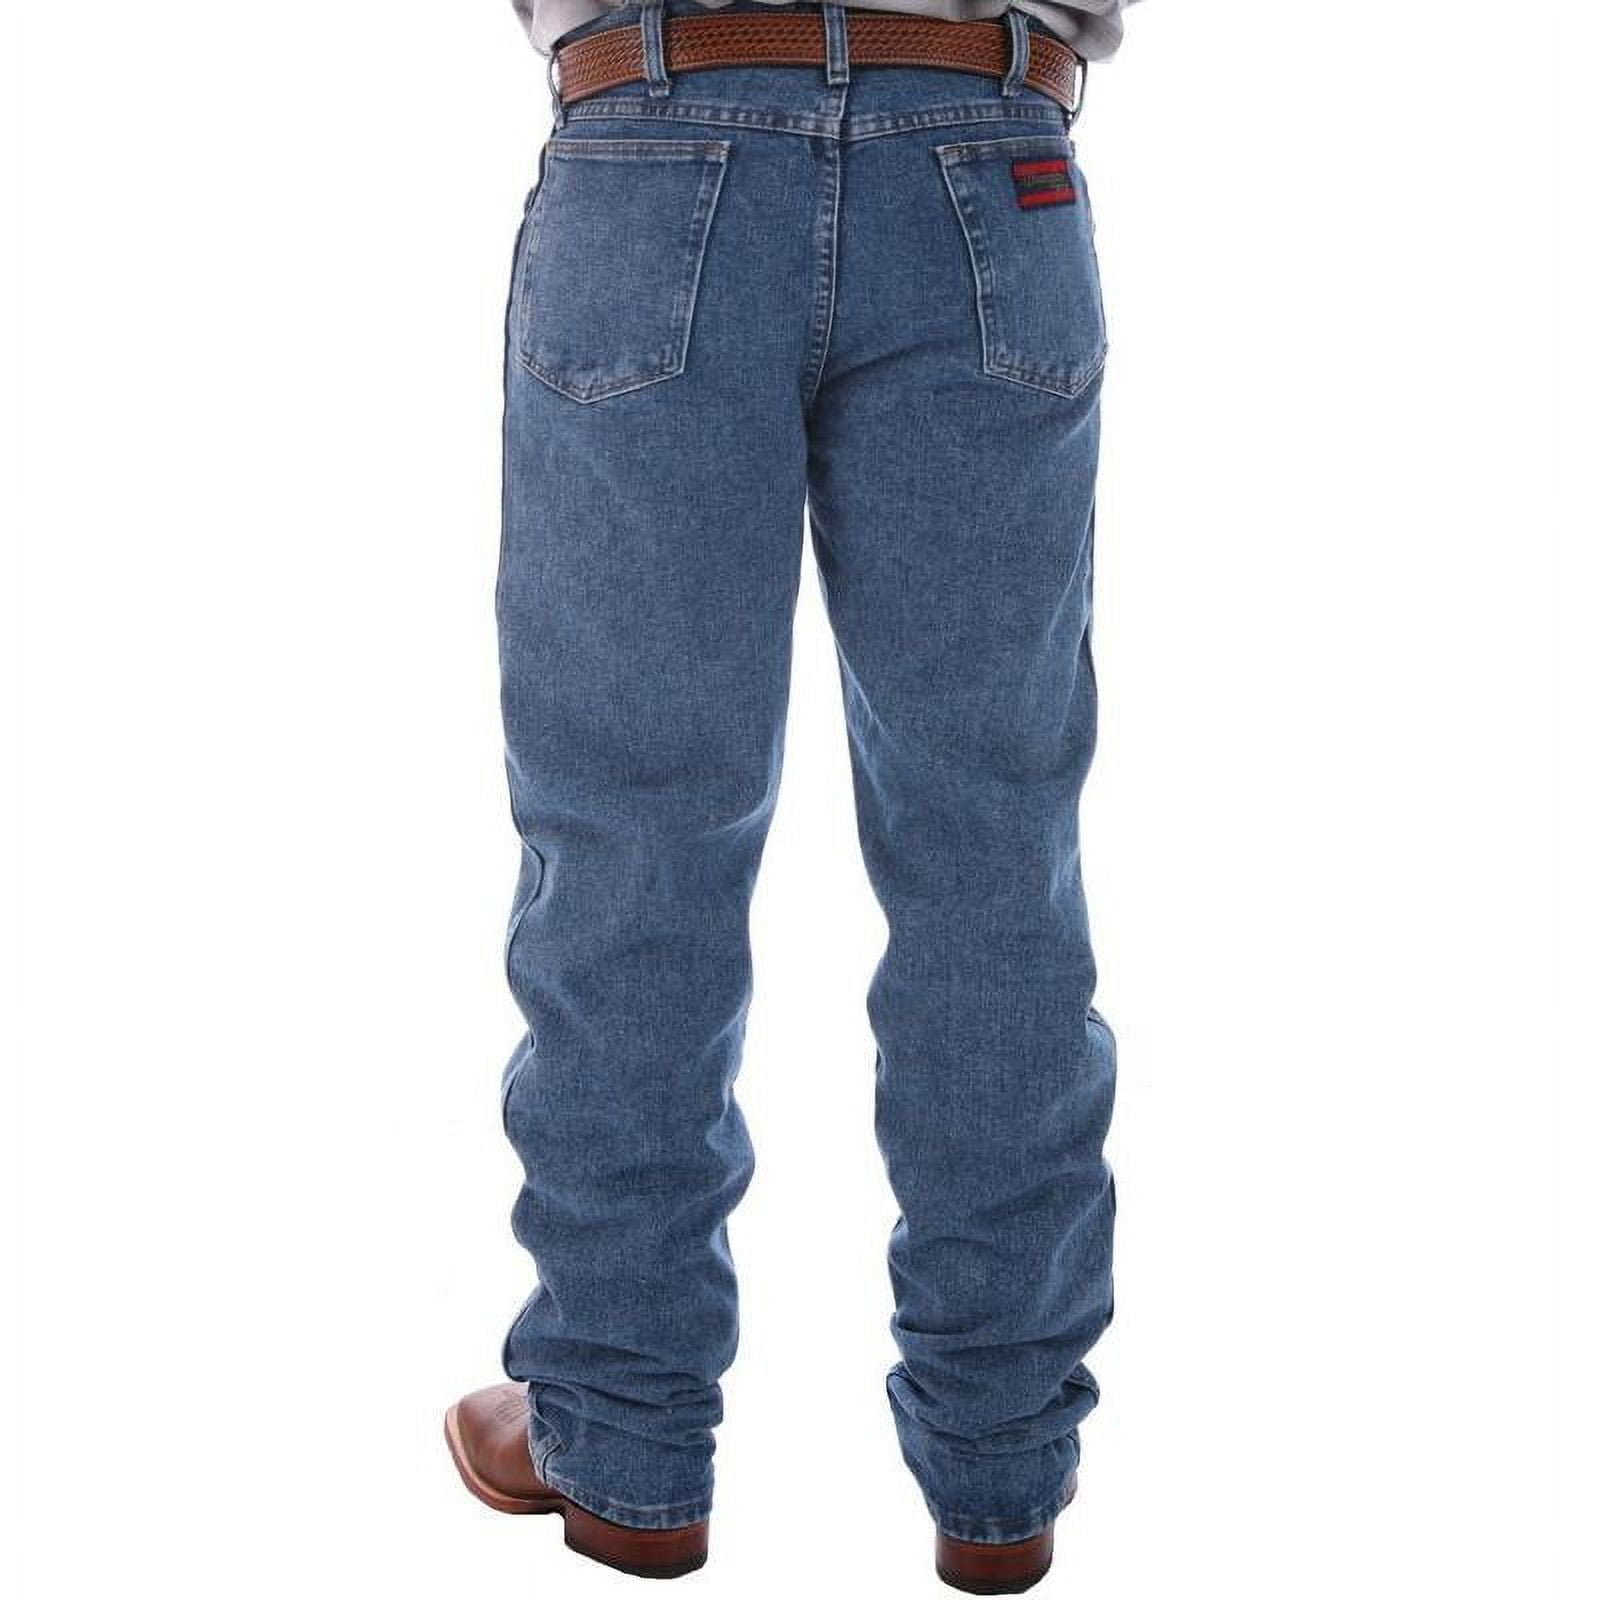 20X Jean,Vintage Men's Fit Original Wrangler Stonewash,36x38 Tall